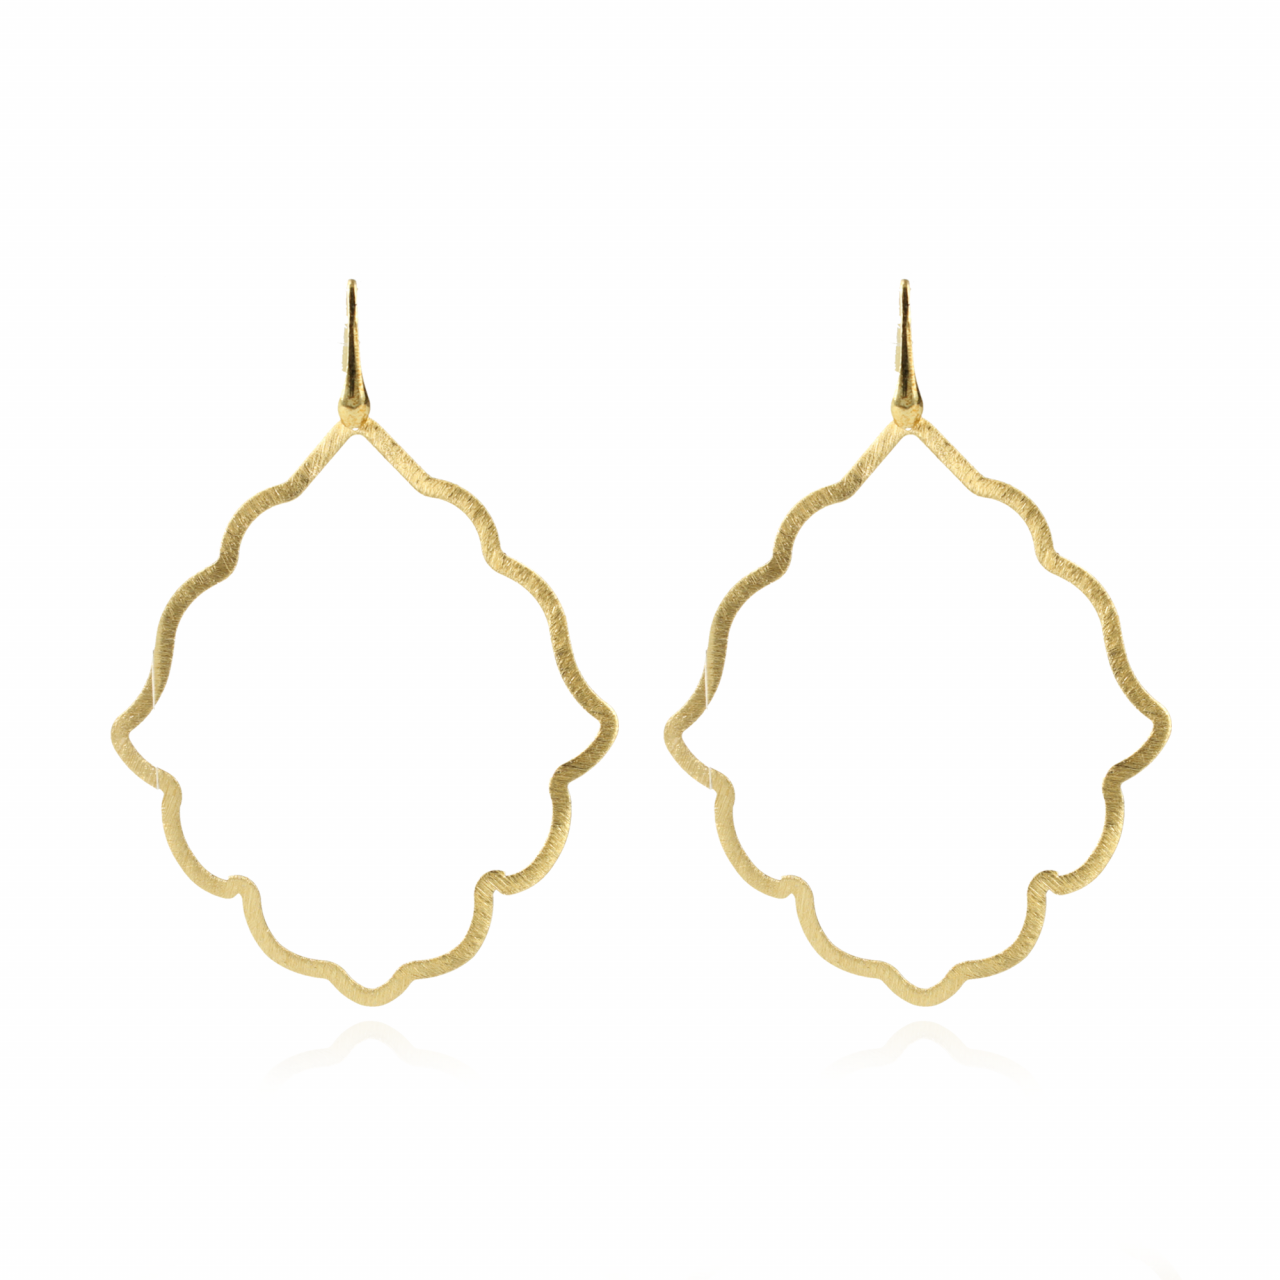 earrings Classic Medallionlott-theme.productDescriptionPage.SEO.byTheBrand